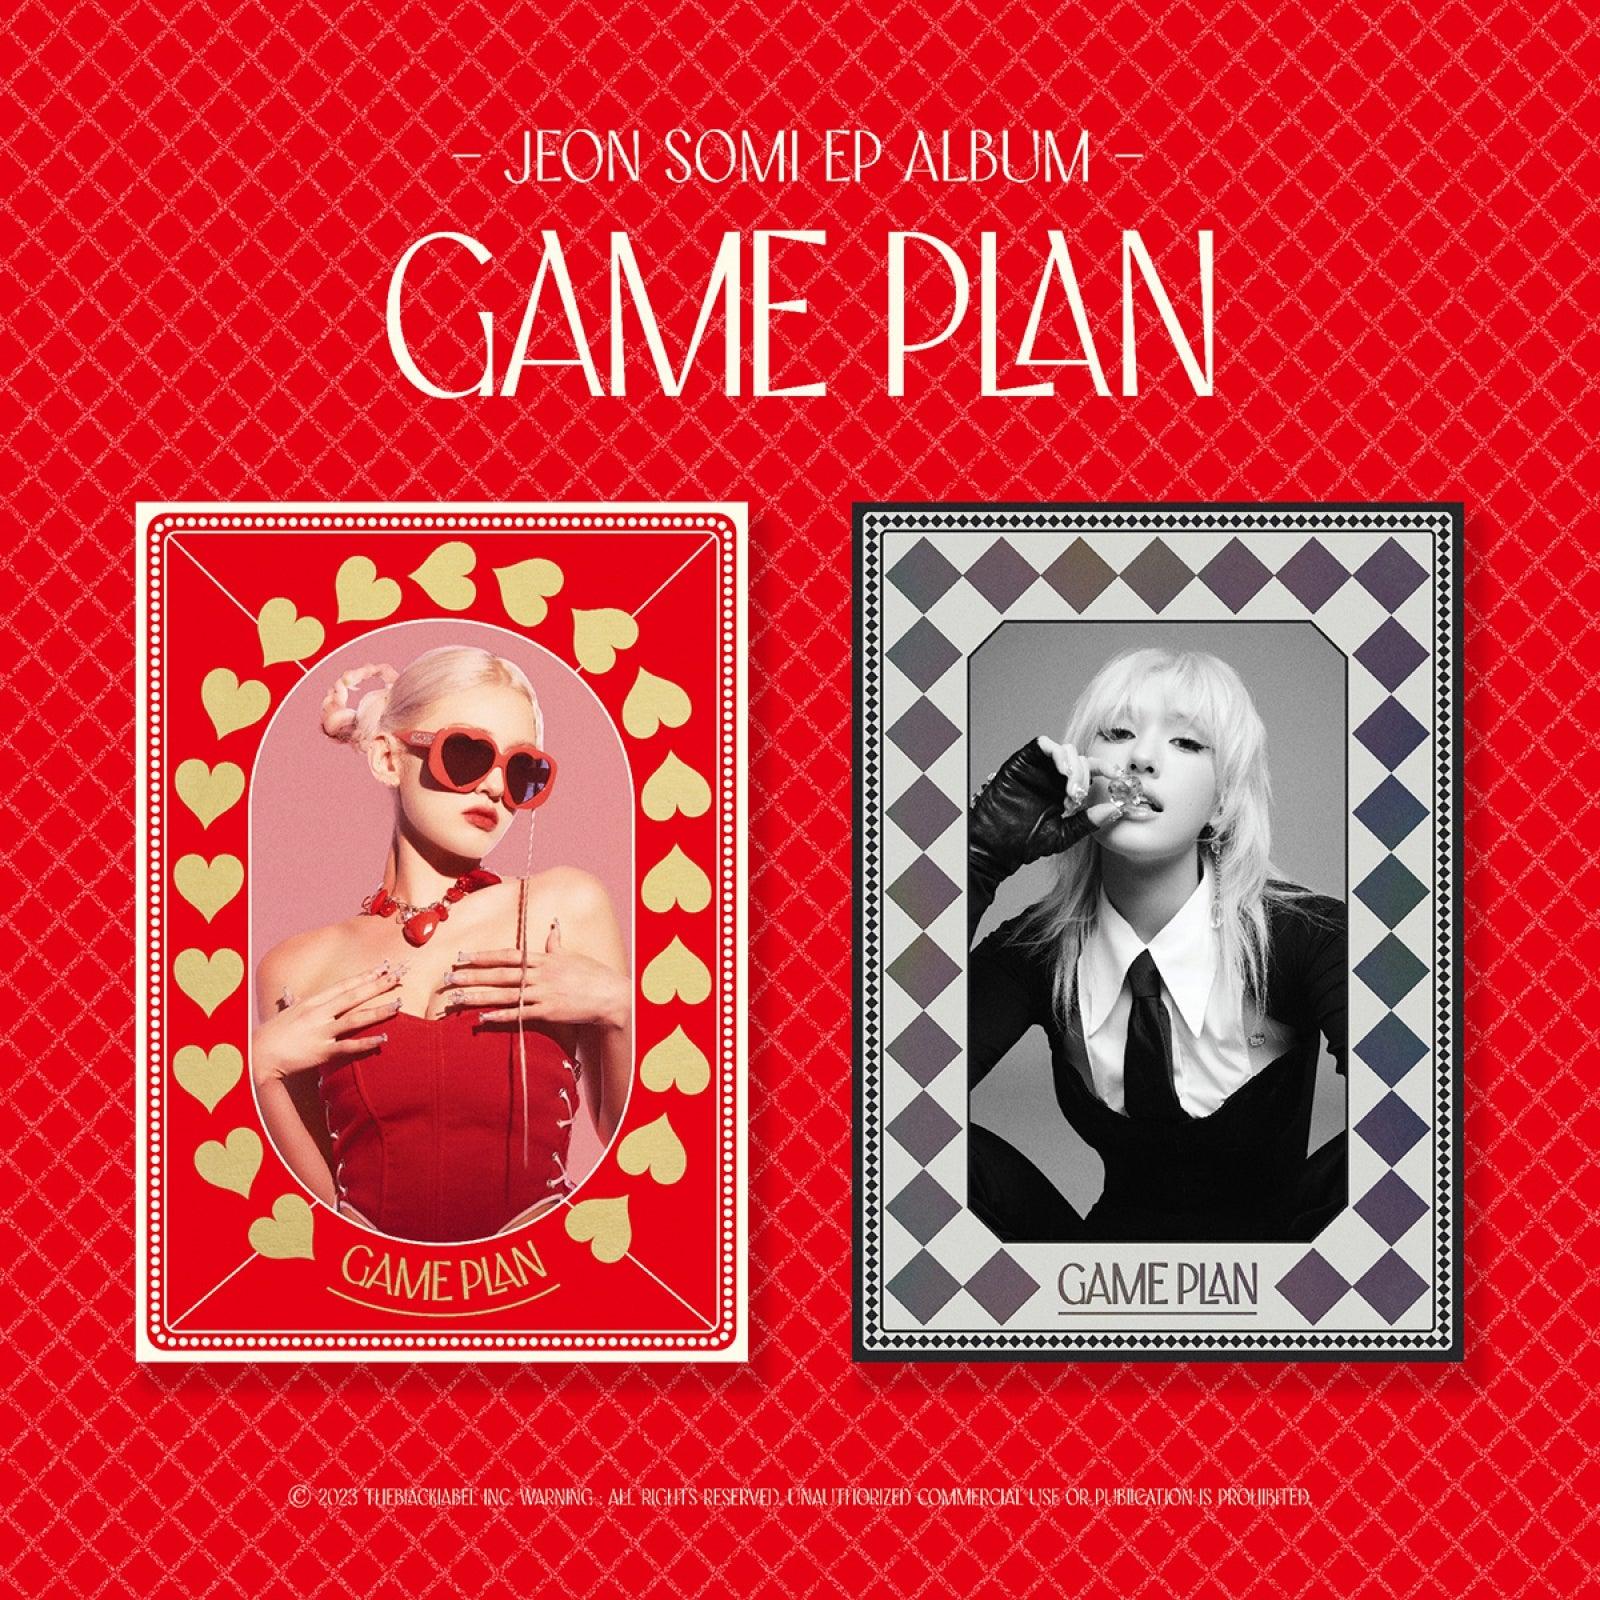 [PRE-ORDER] JEON SOMI - GAME PLAN / EP ALBUM (PHOTOBOOK Ver.) - Shopping Around the World with Goodsnjoy